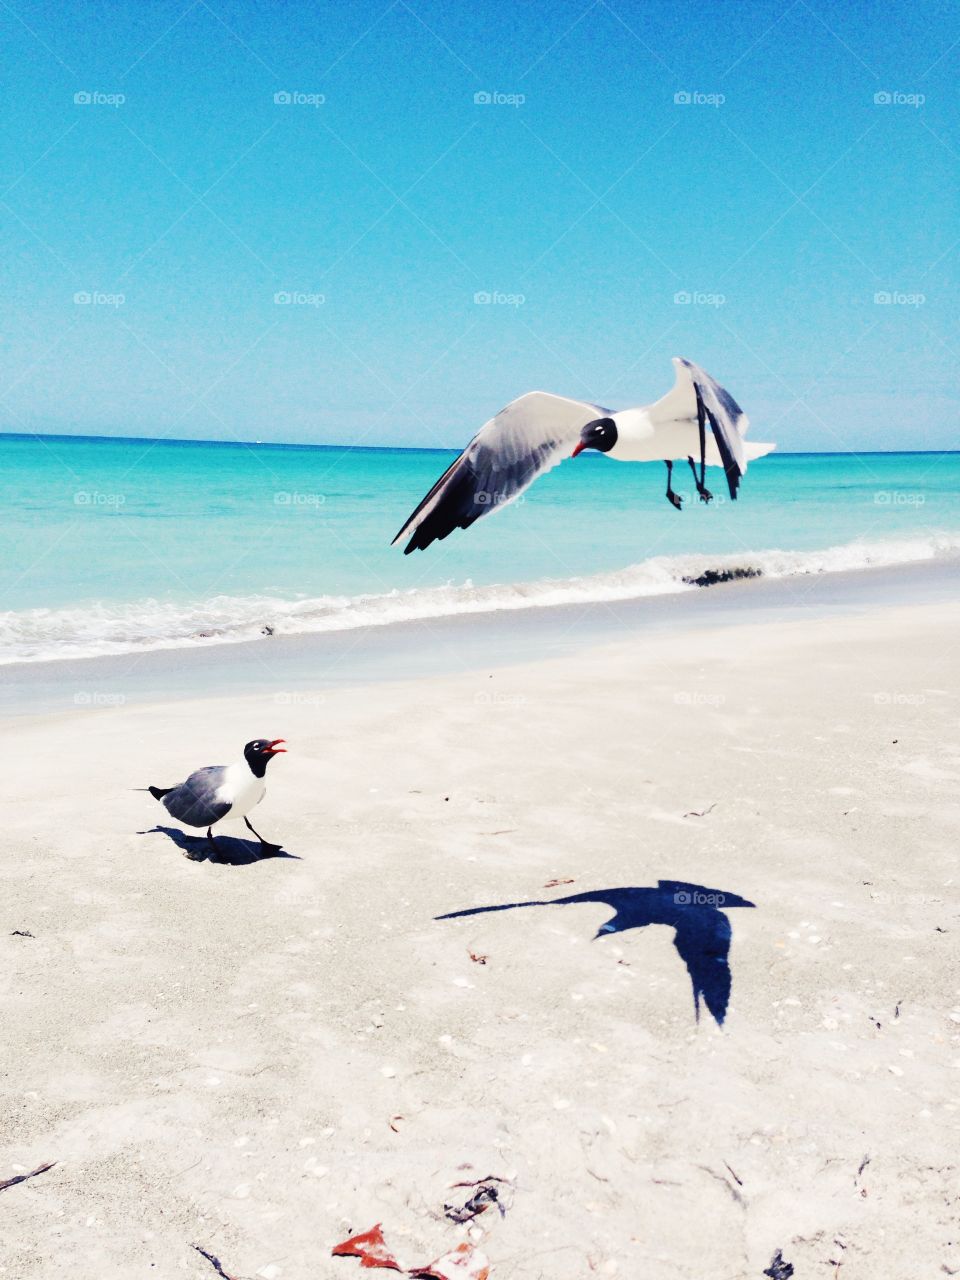 Seagulls. Seagulls fighting over food